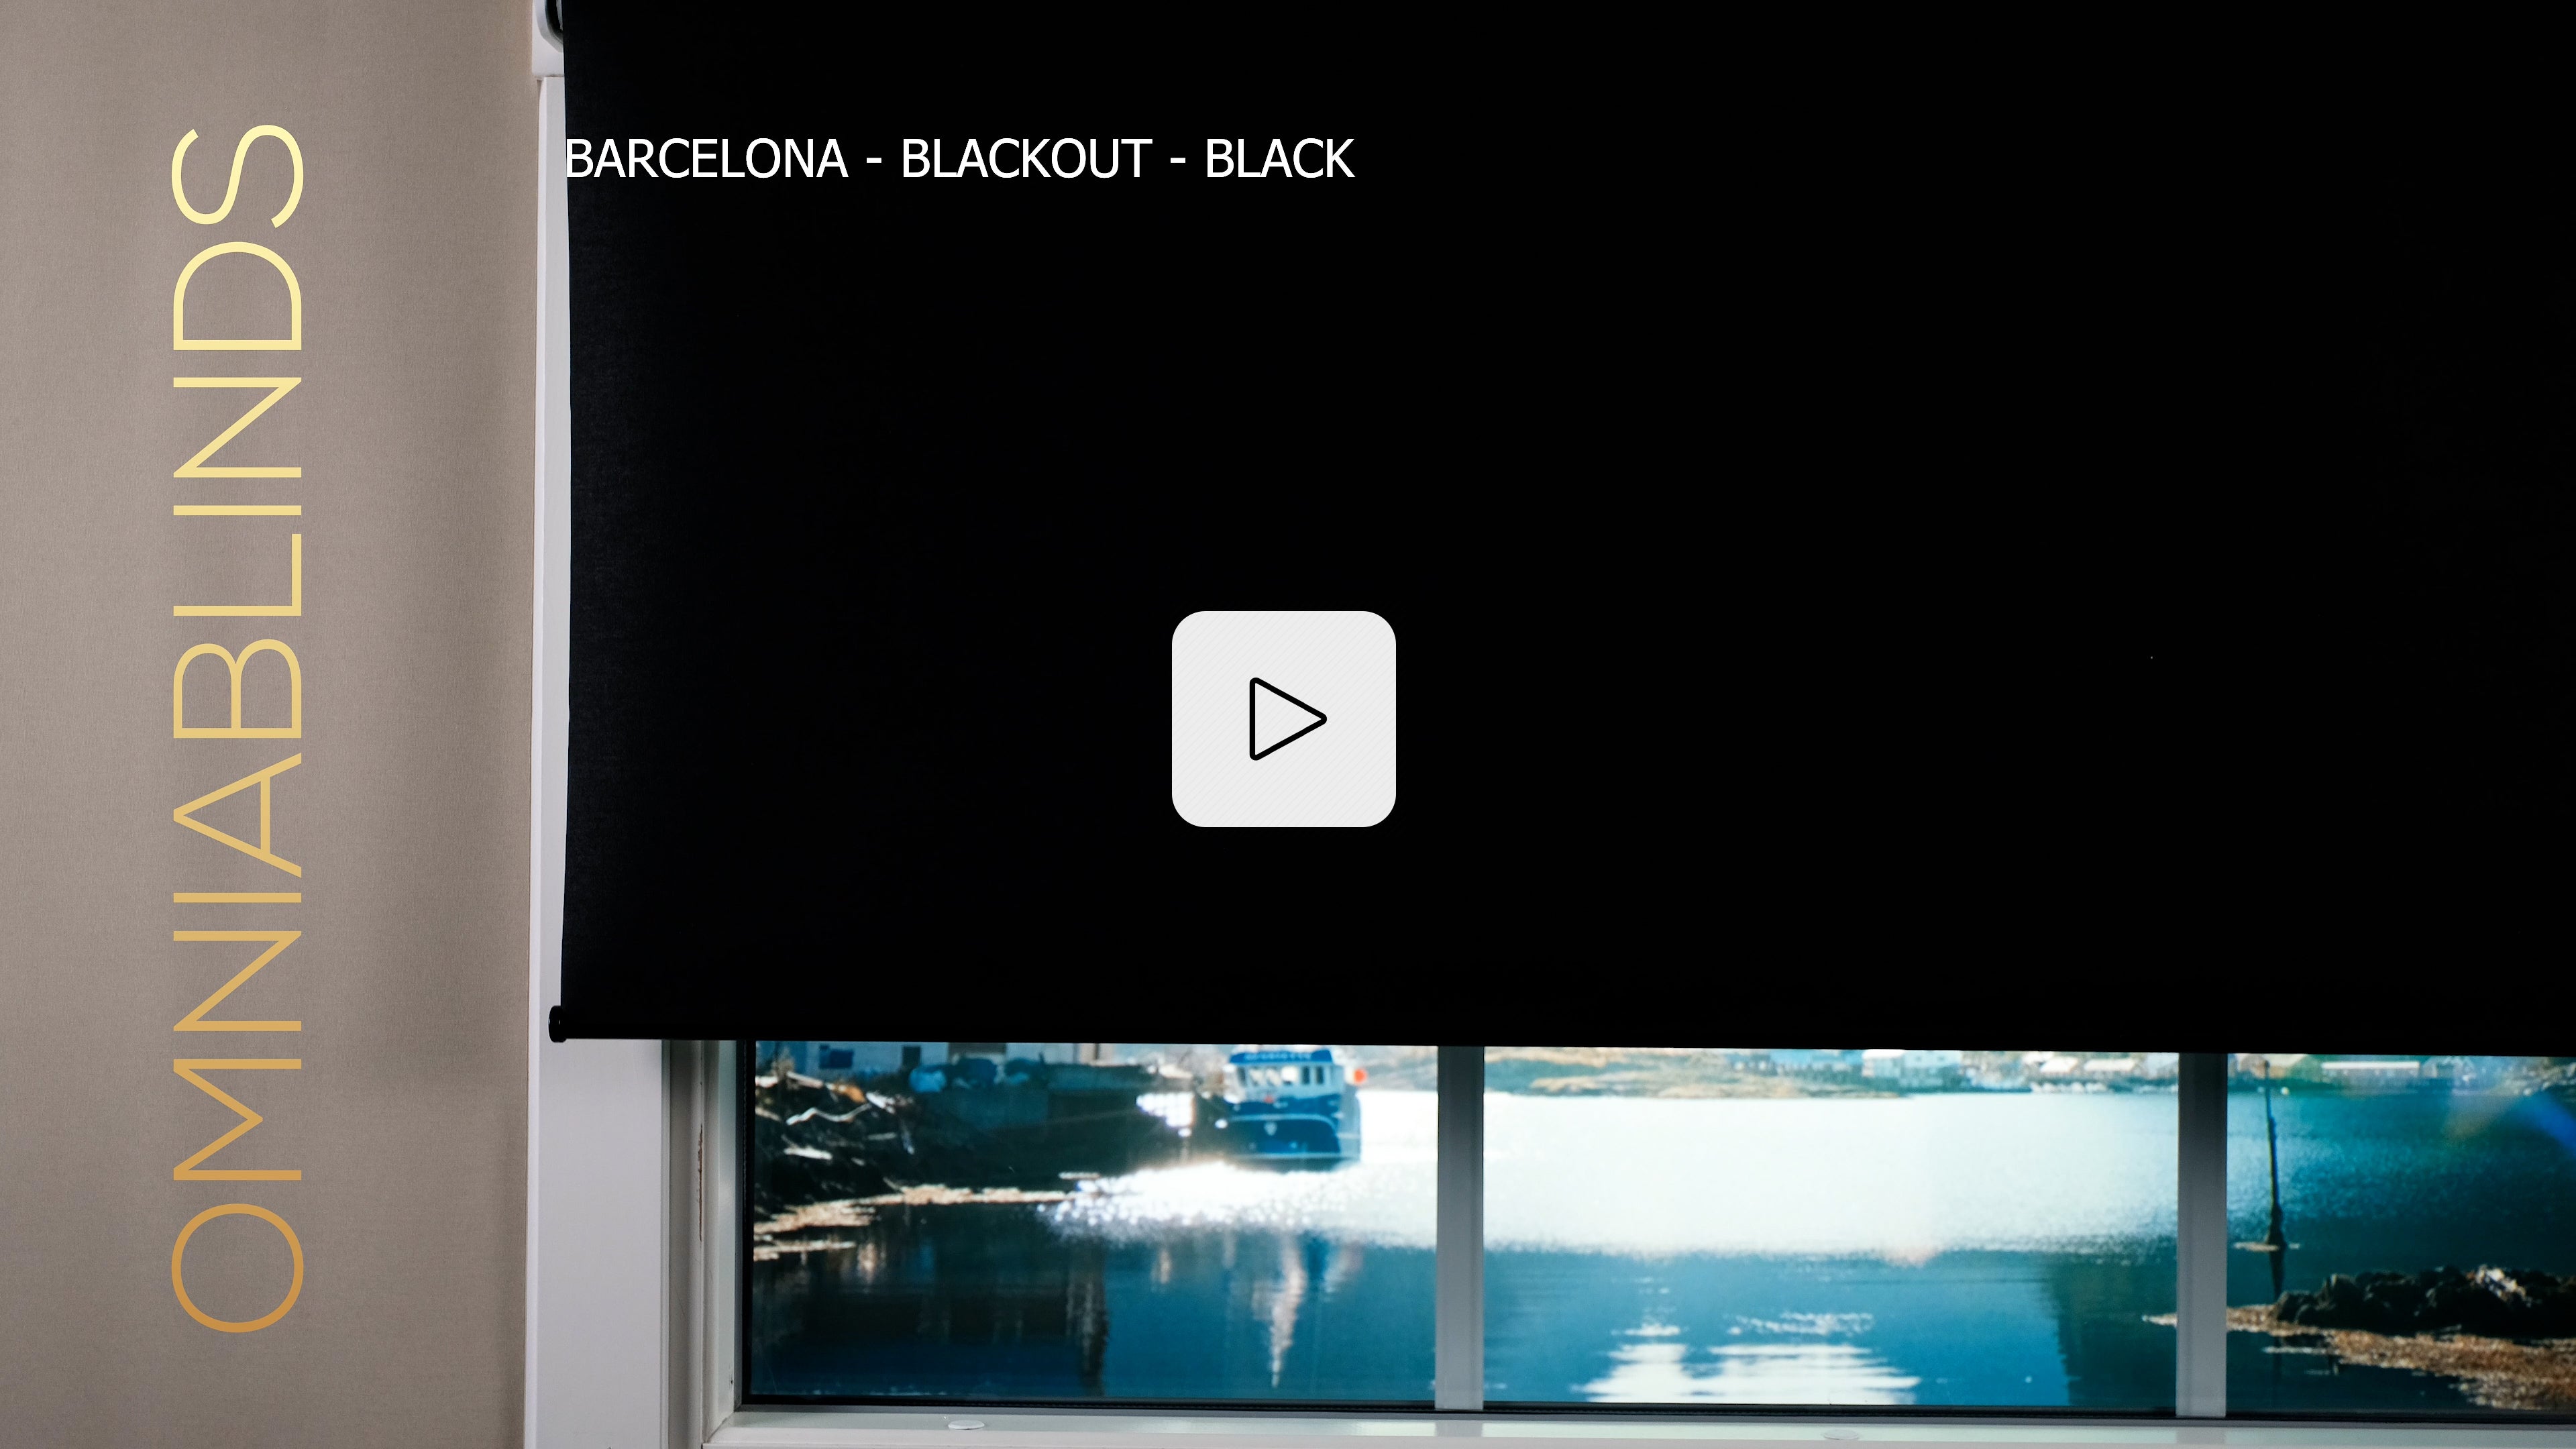 Barcelona - Blackout - Black